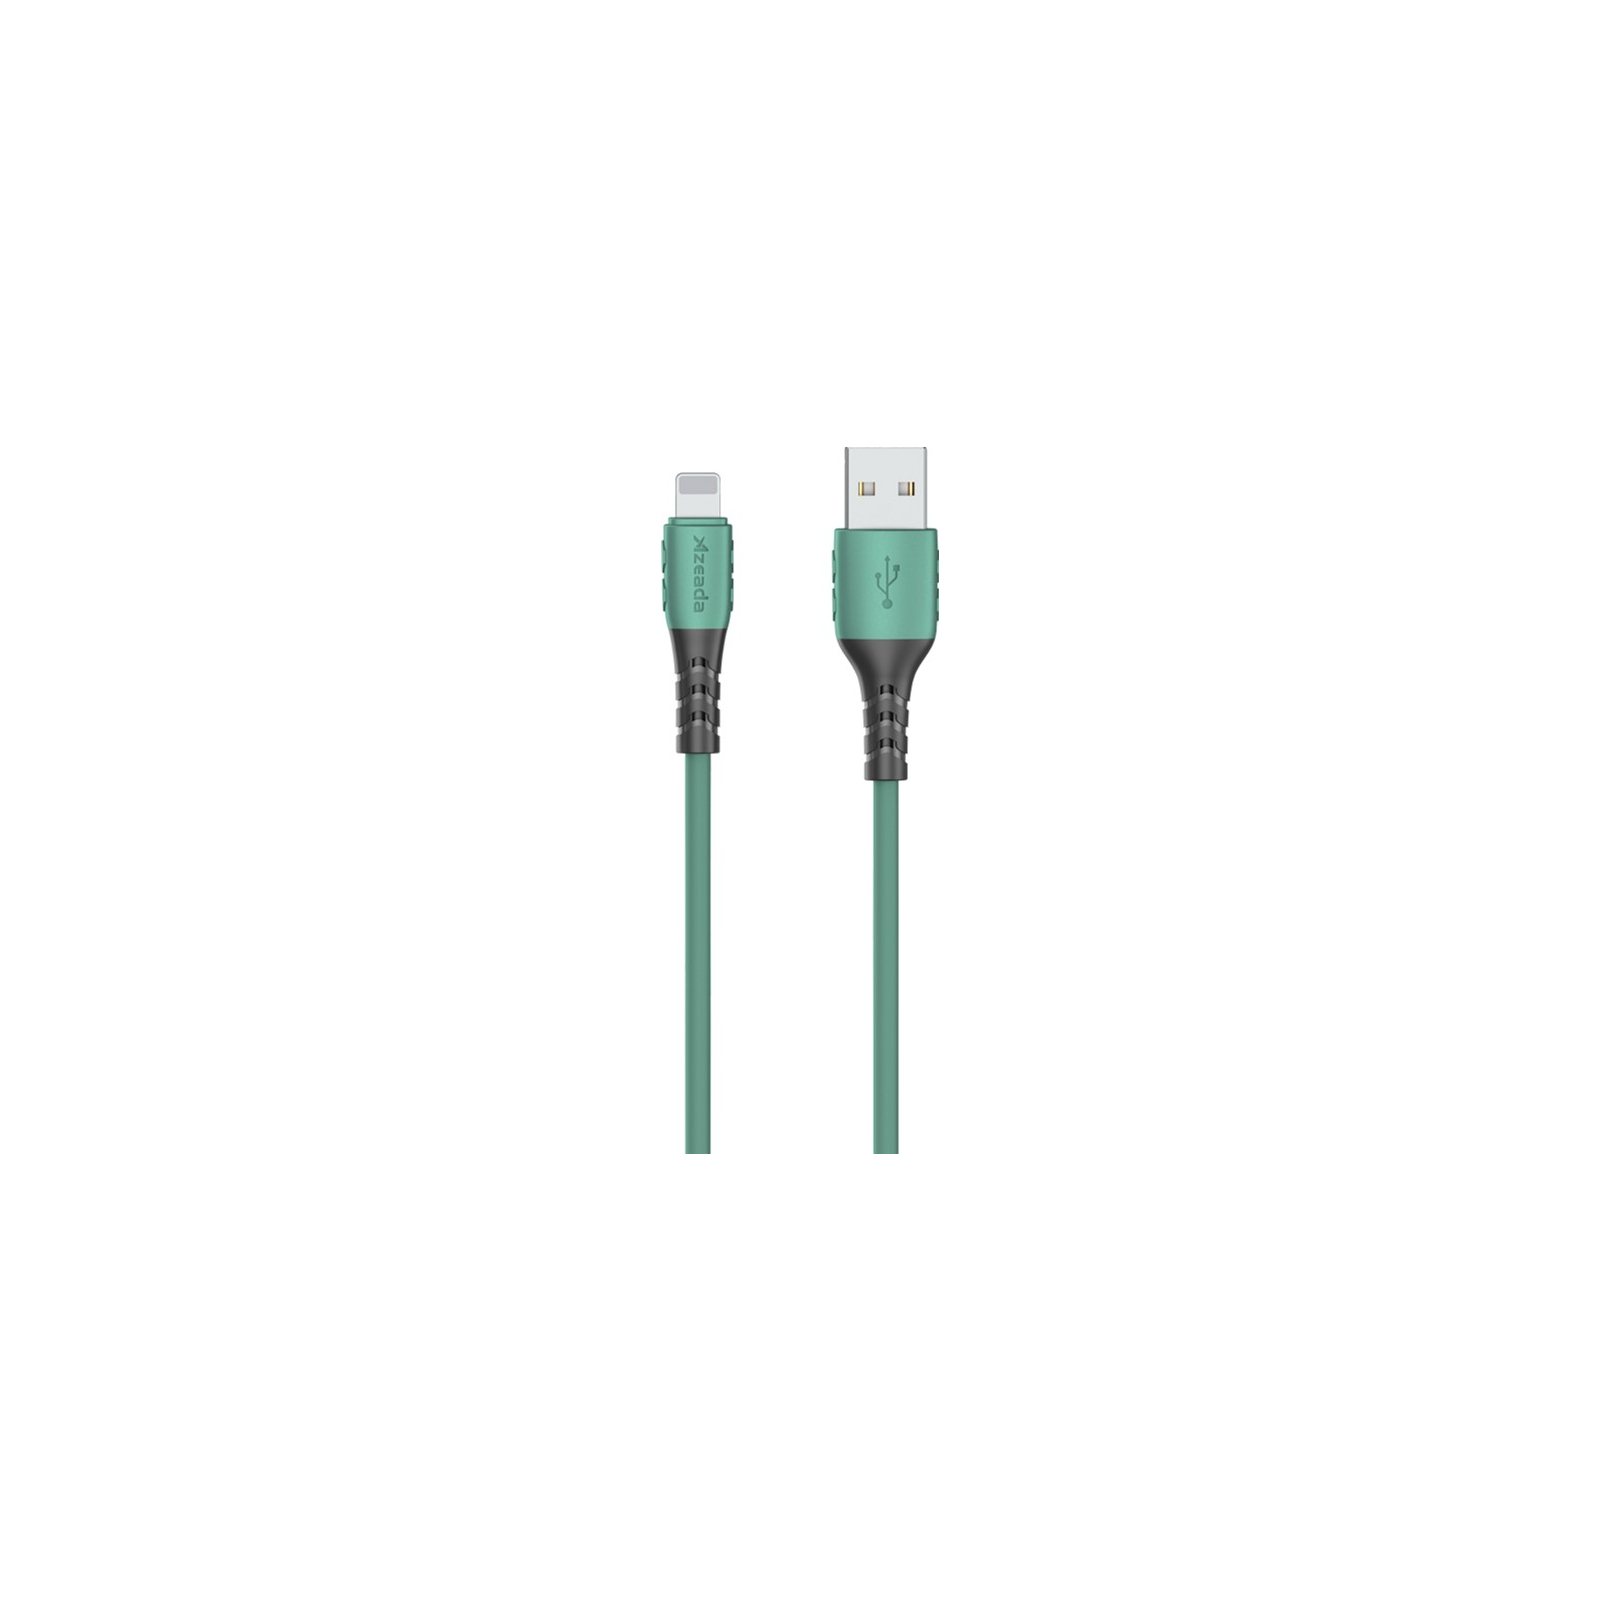 Дата кабель USB 2.0 AM to Lightning 1.0m PD-B51i White Proda (PD-B51i-WH)